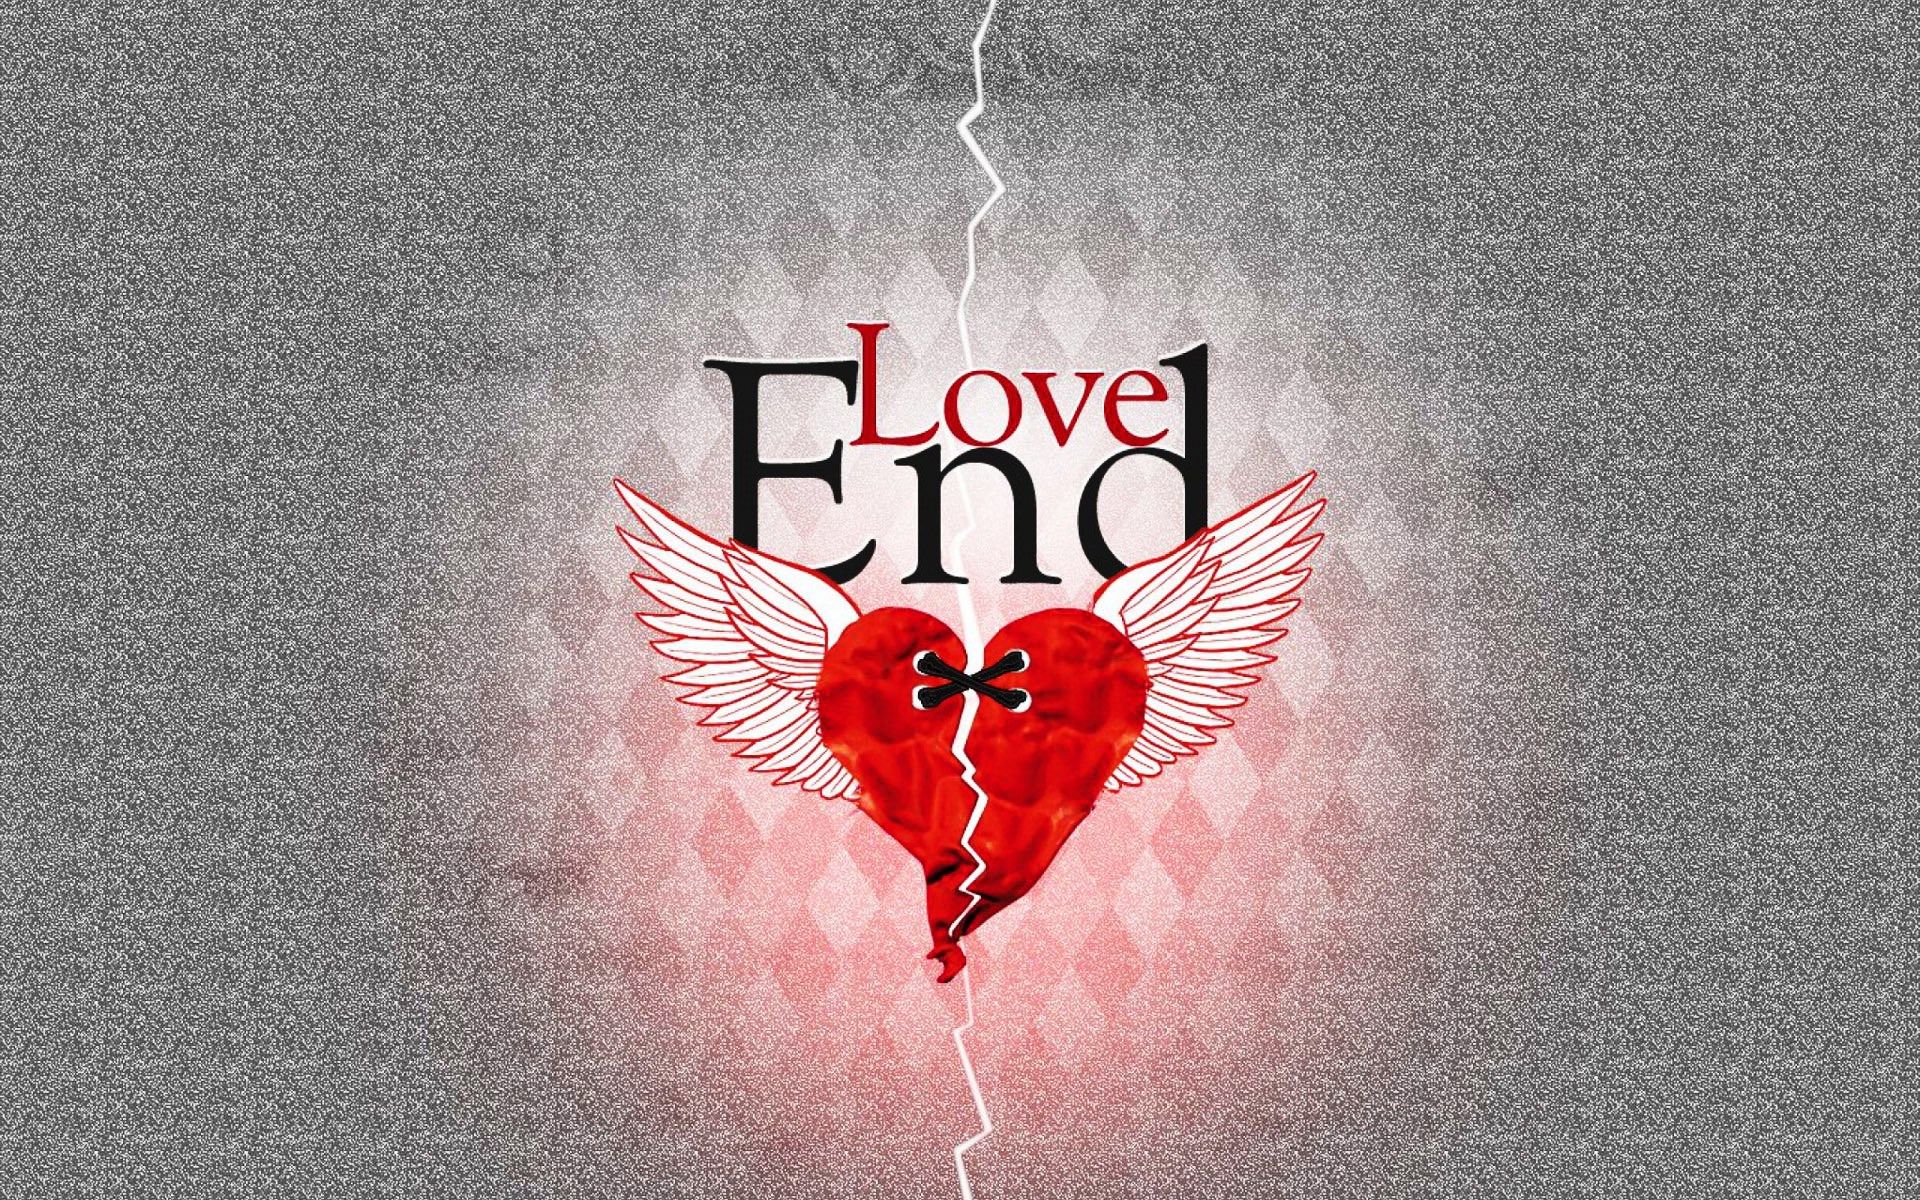 Love Break Up Images Free Download - Heart , HD Wallpaper & Backgrounds